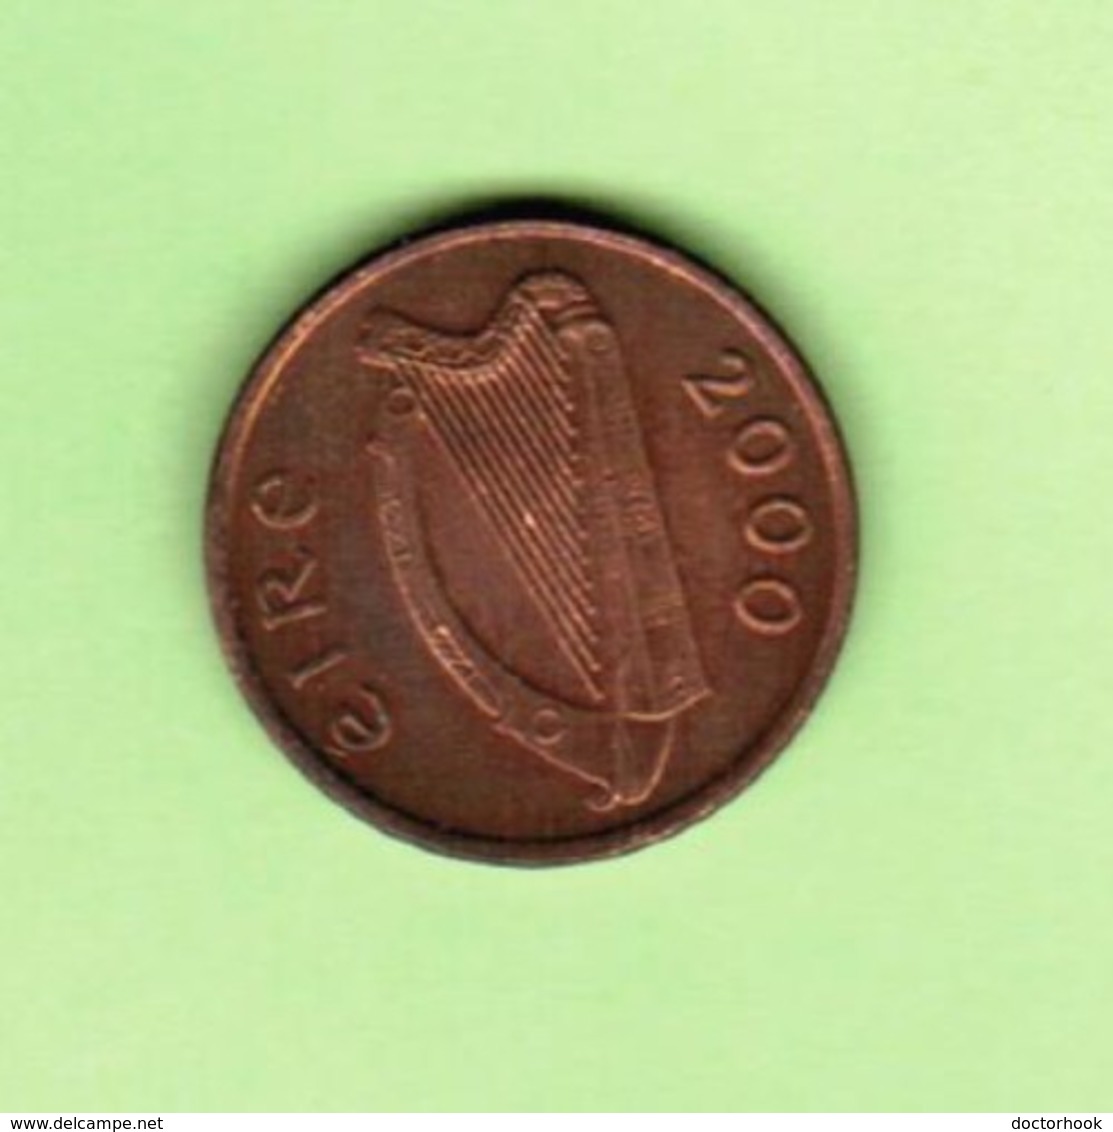 IRELAND   1 PENNY 2000  (KM # 20a) #5210 - Irlande